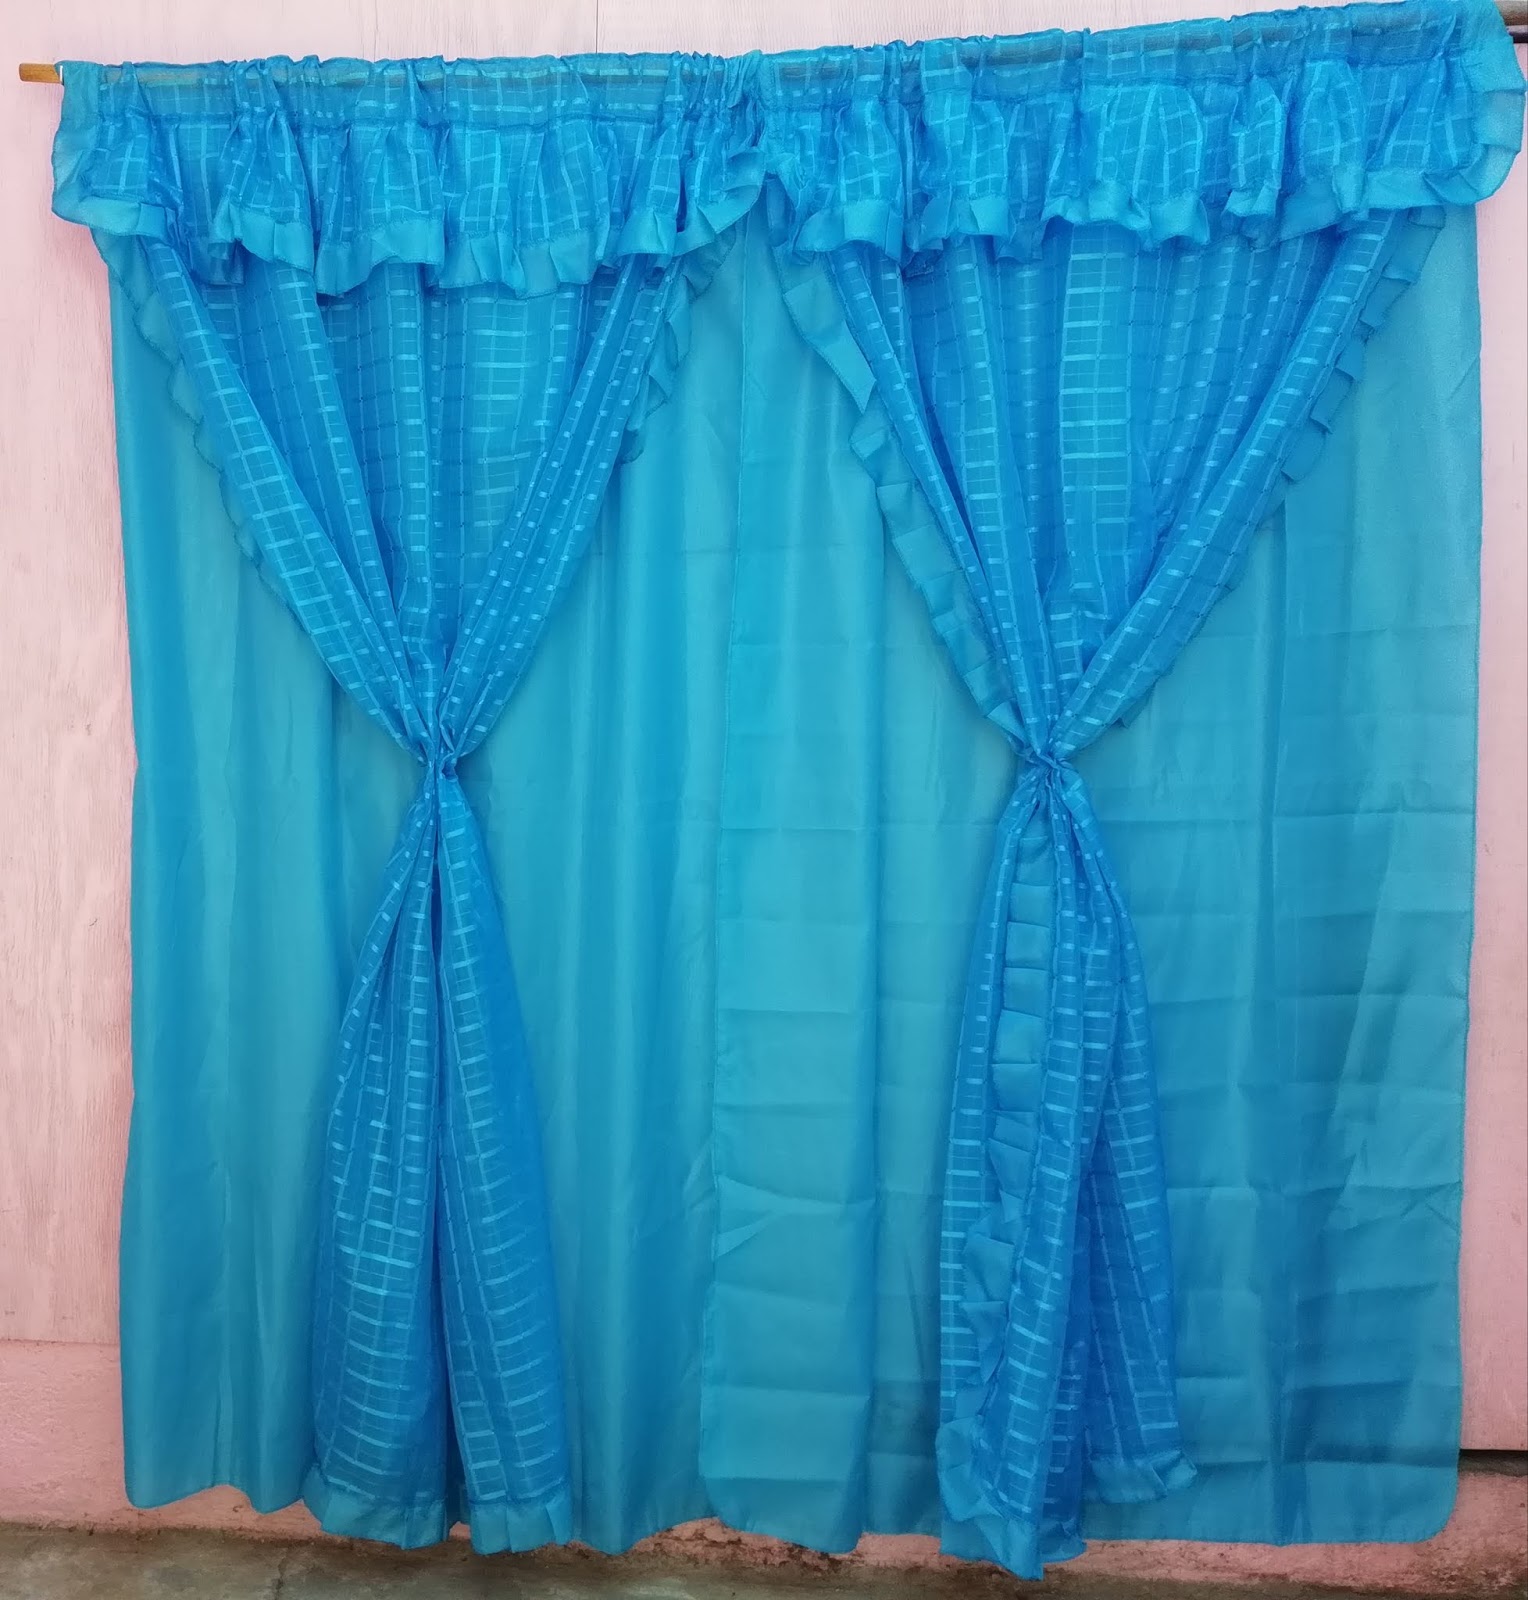  Cortina de madera para ventana, color azul y amarillo, 54 x 18  pulgadas, 1 panel, chancletas de verano, decoración del hogar, cortina con  bolsillo para barra, cortinas de nivel corto para